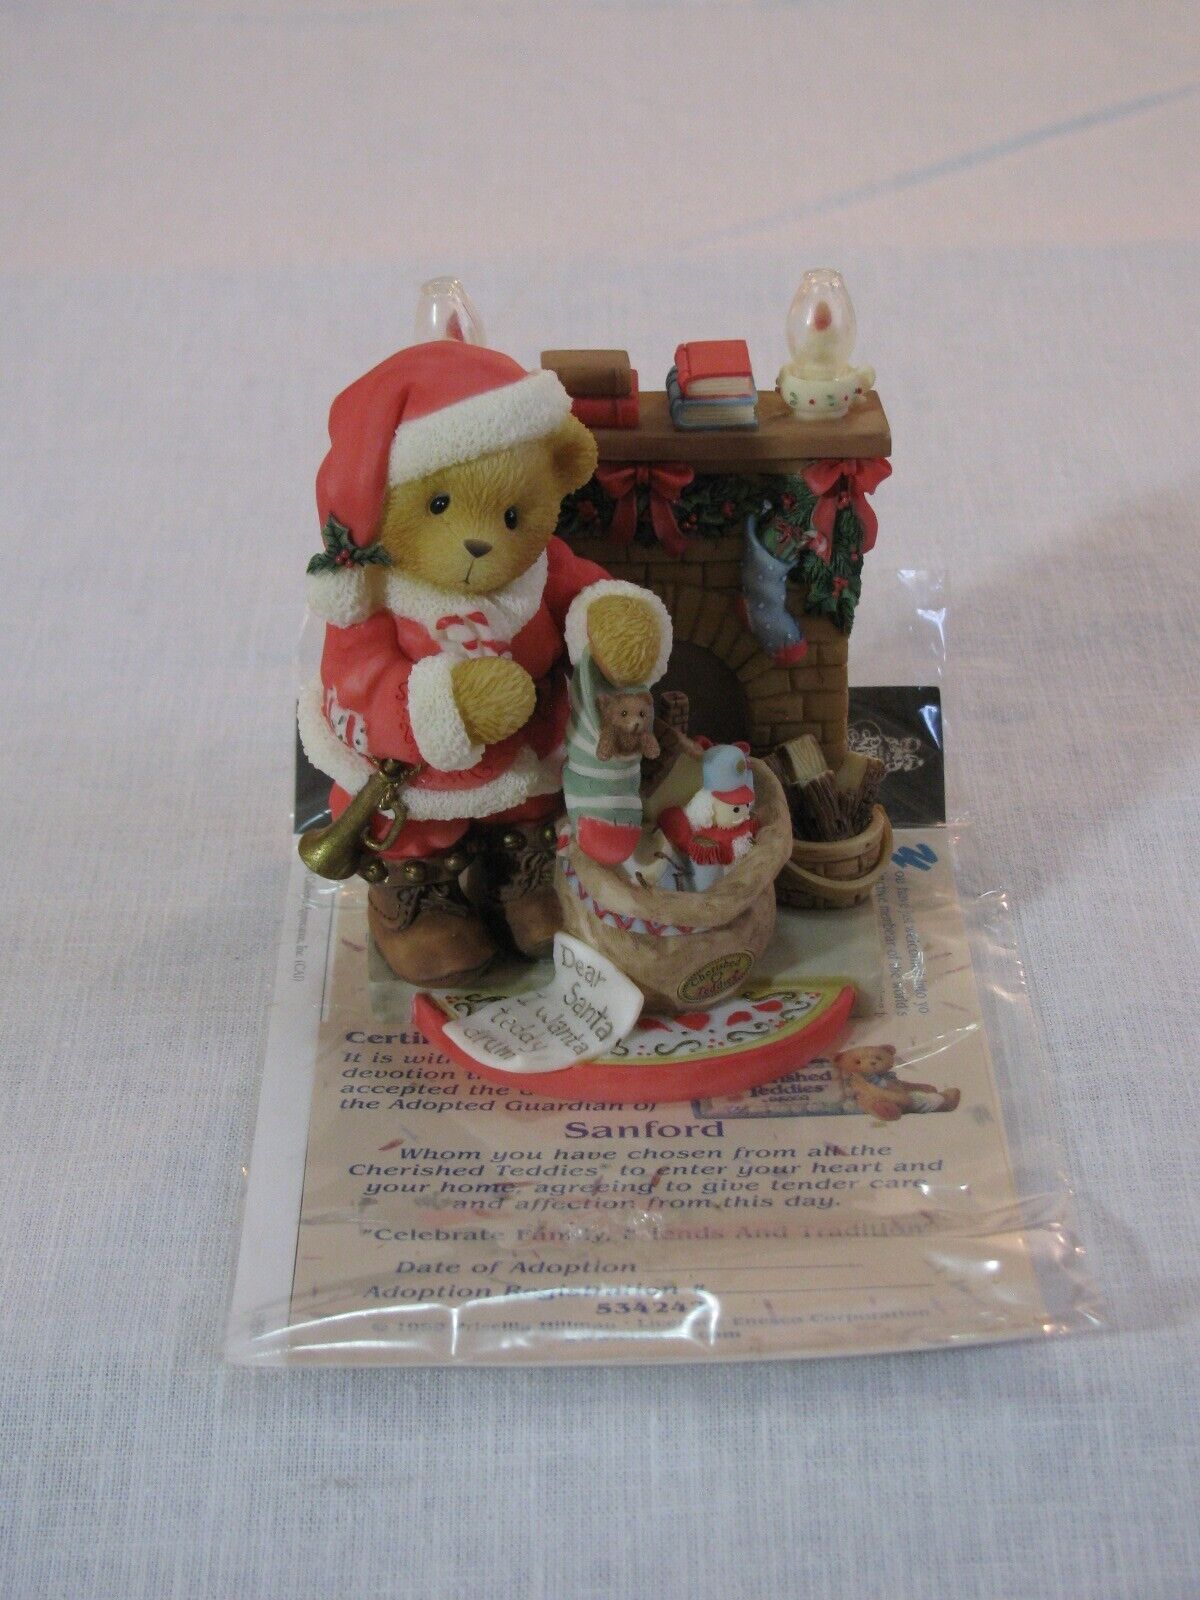 Vtg Cherished Teddies Sanford Celebrate Tradition Ltd Ed Figurine 534242, 1999